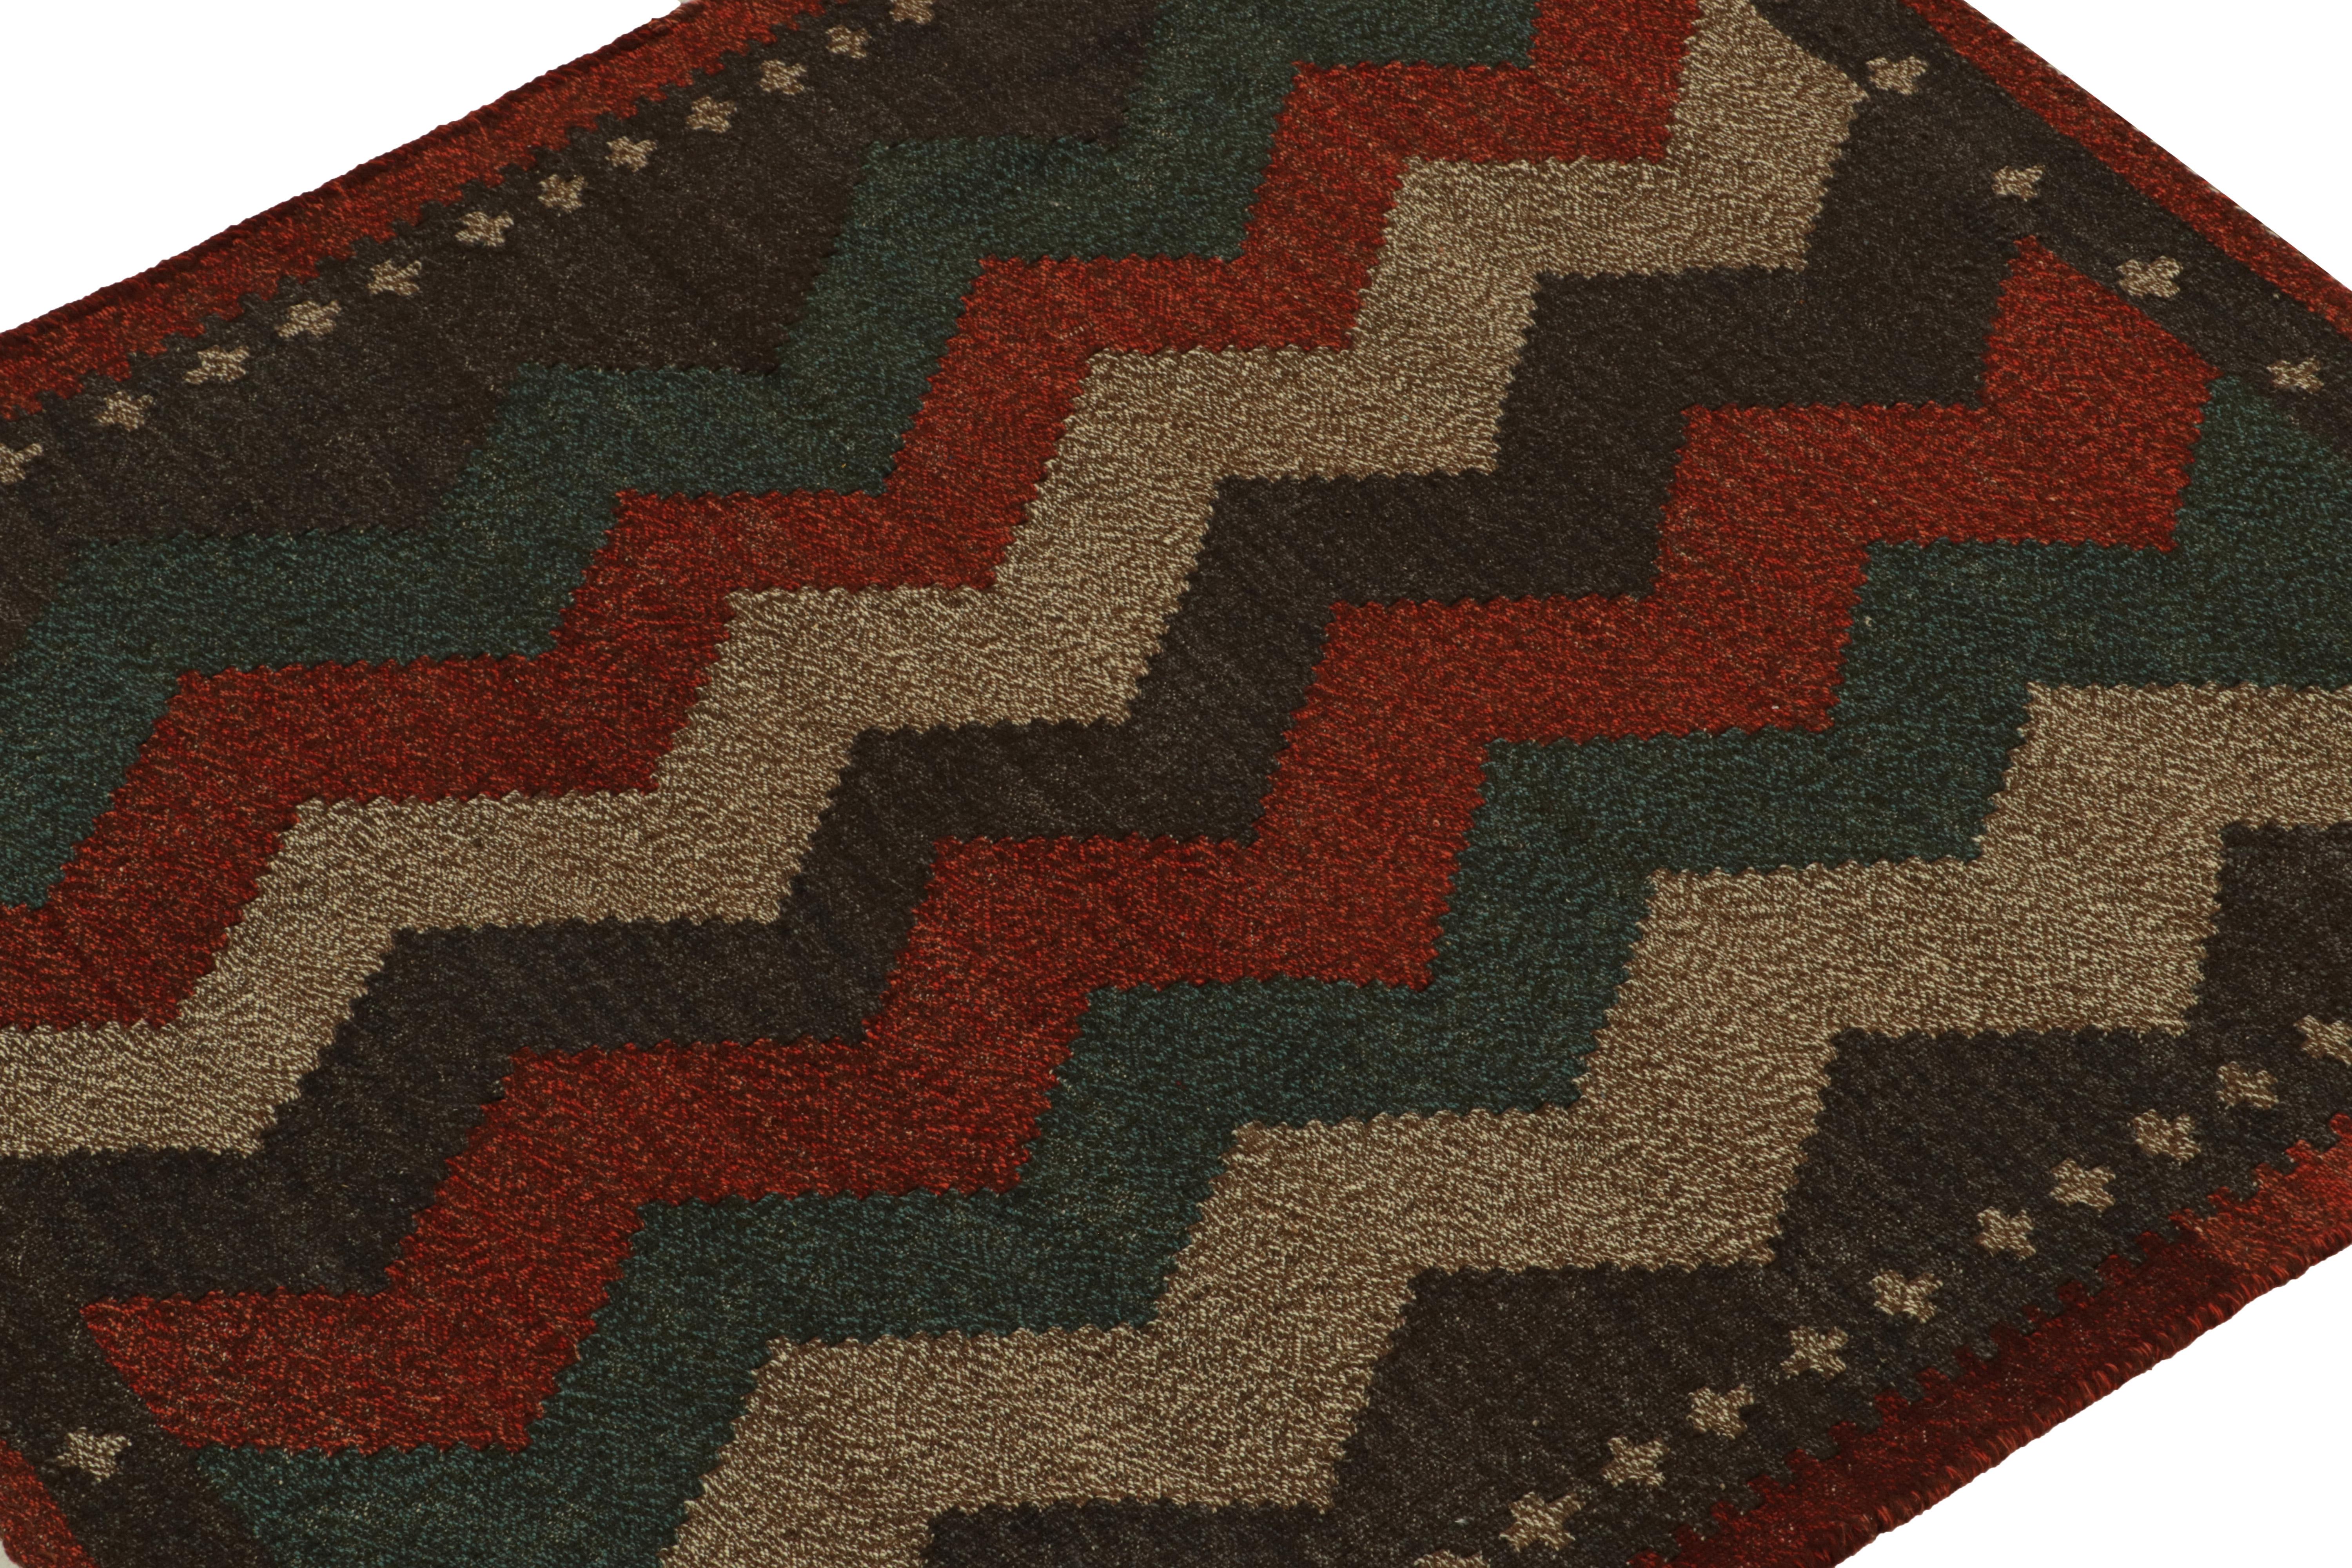 Tribal 1980s Vintage Sofreh Kilim rug in Beige-Brown Red Chevron Pattern by Rug & Kilim For Sale